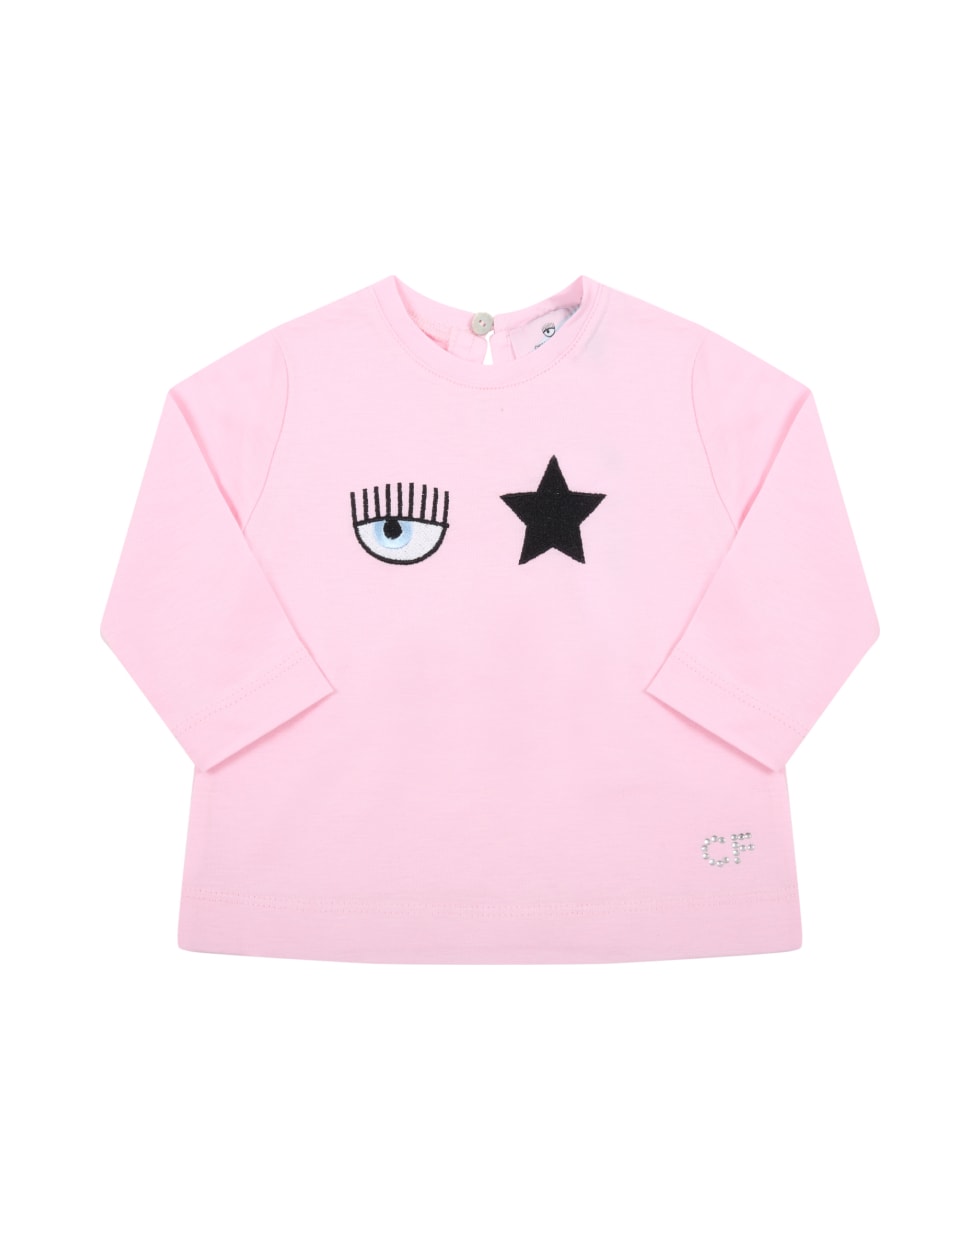 Chiara Ferragni Pink T-shirt For Baby Girl With Eyestar - Rosa